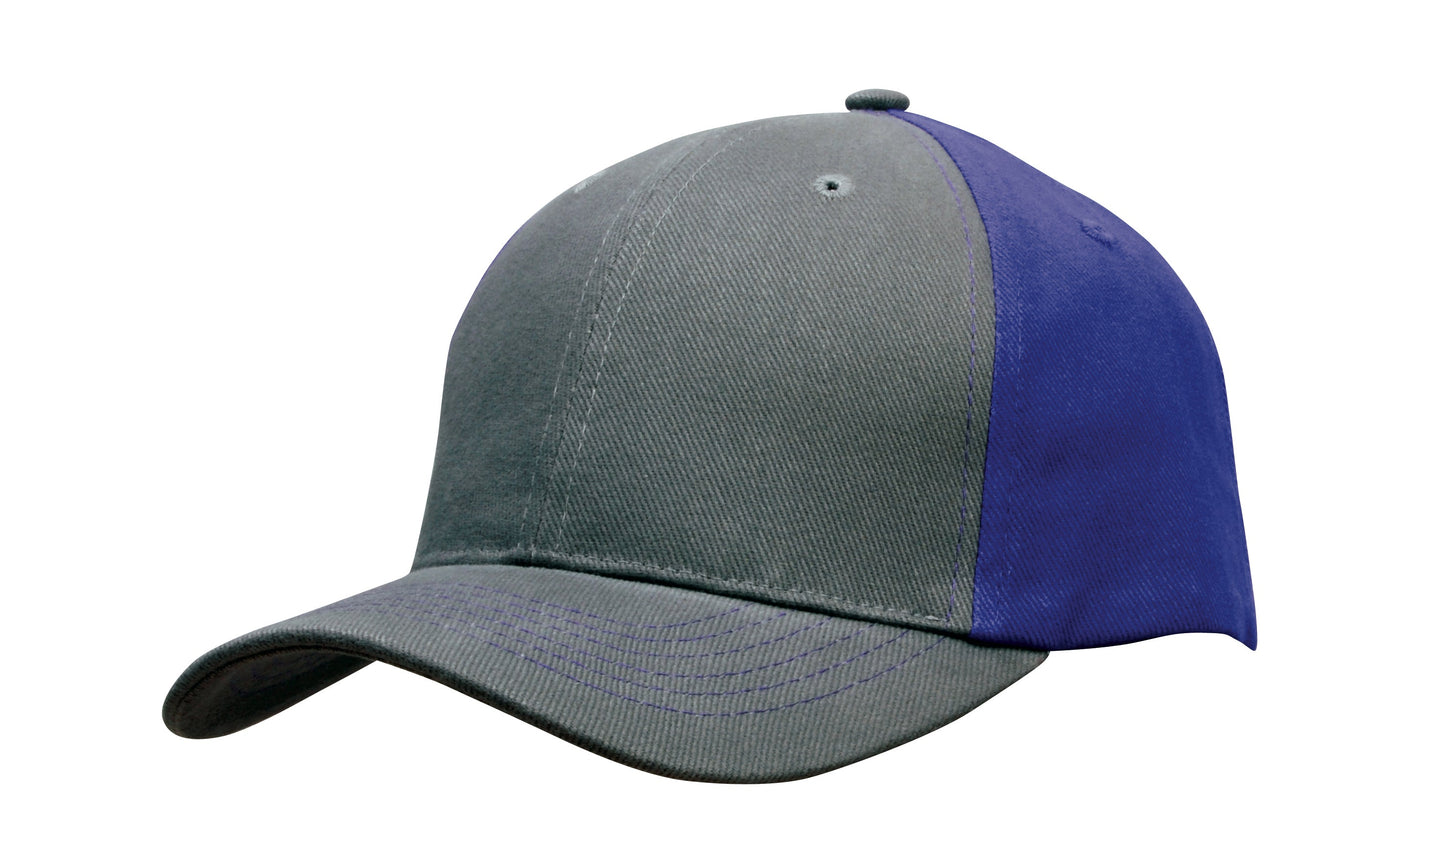 Headwear Brushed Heavy Cotton 2 Tone X12 - 4001 Cap Headwear Professionals Charcoal/Purple One Size 